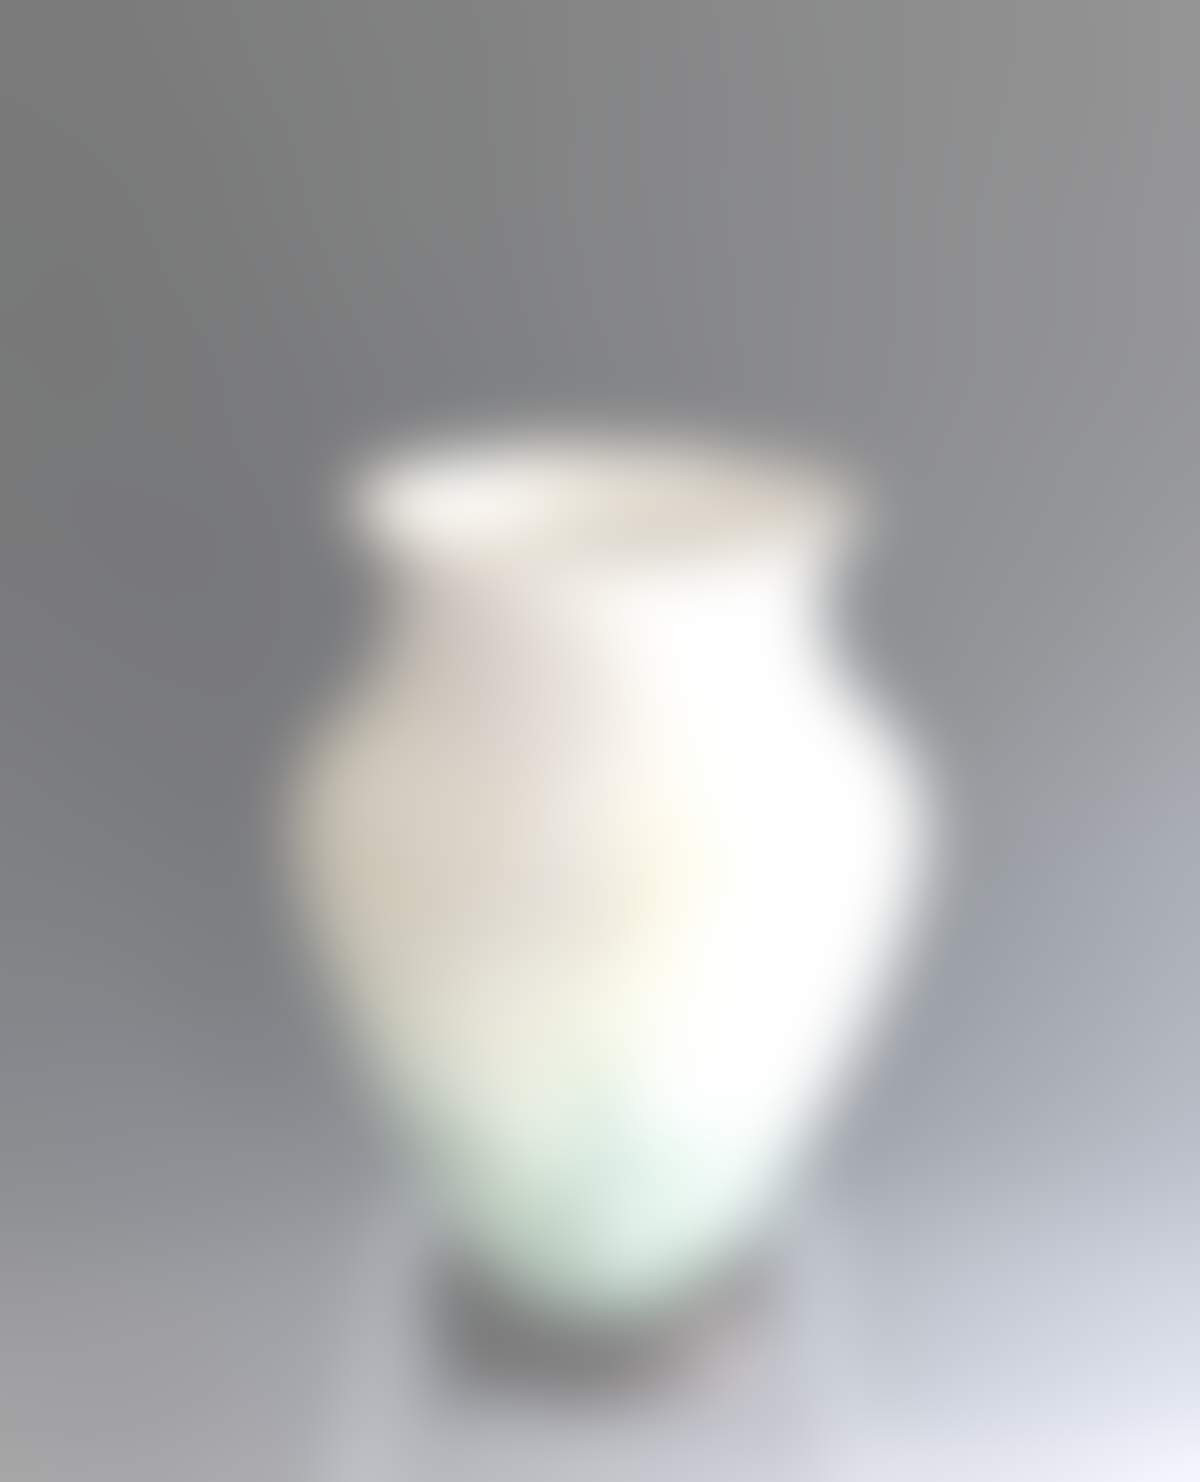 handmade ceramic vases for sale of amazon com handmade ceramic vase crystalline pottery porcelain pertaining to amazon com handmade ceramic vase crystalline pottery porcelain flower vase by susan fontaine pottery handmade